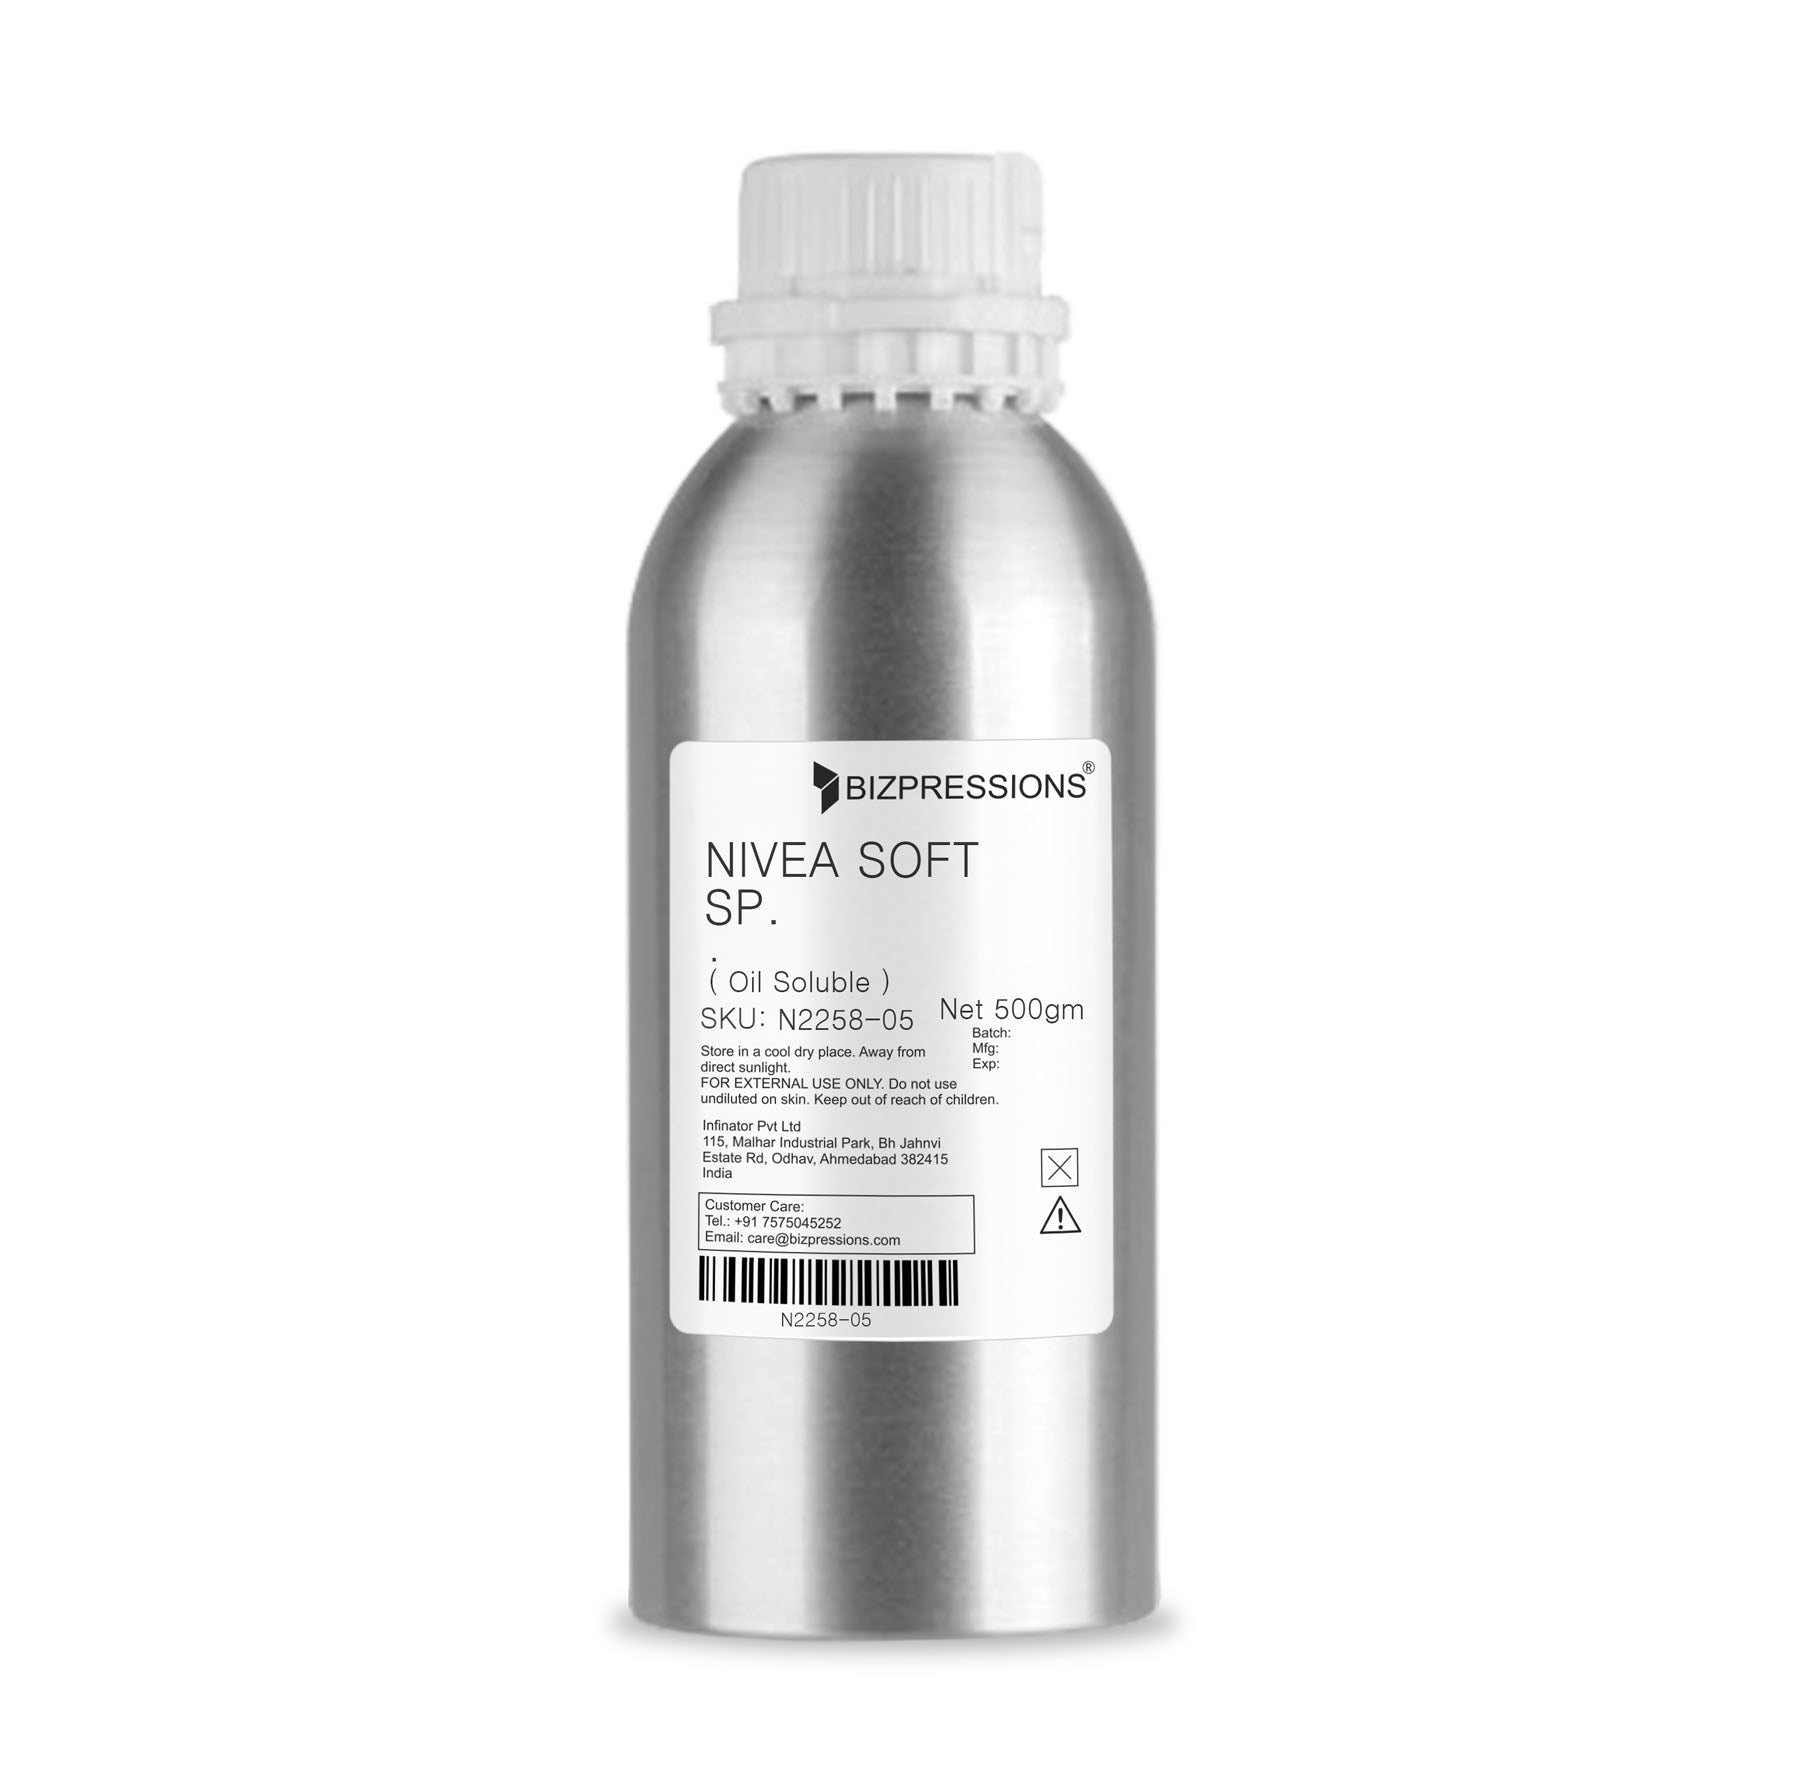 NIVEA SOFT SP. - Fragrance ( Oil Soluble ) - 500 gm